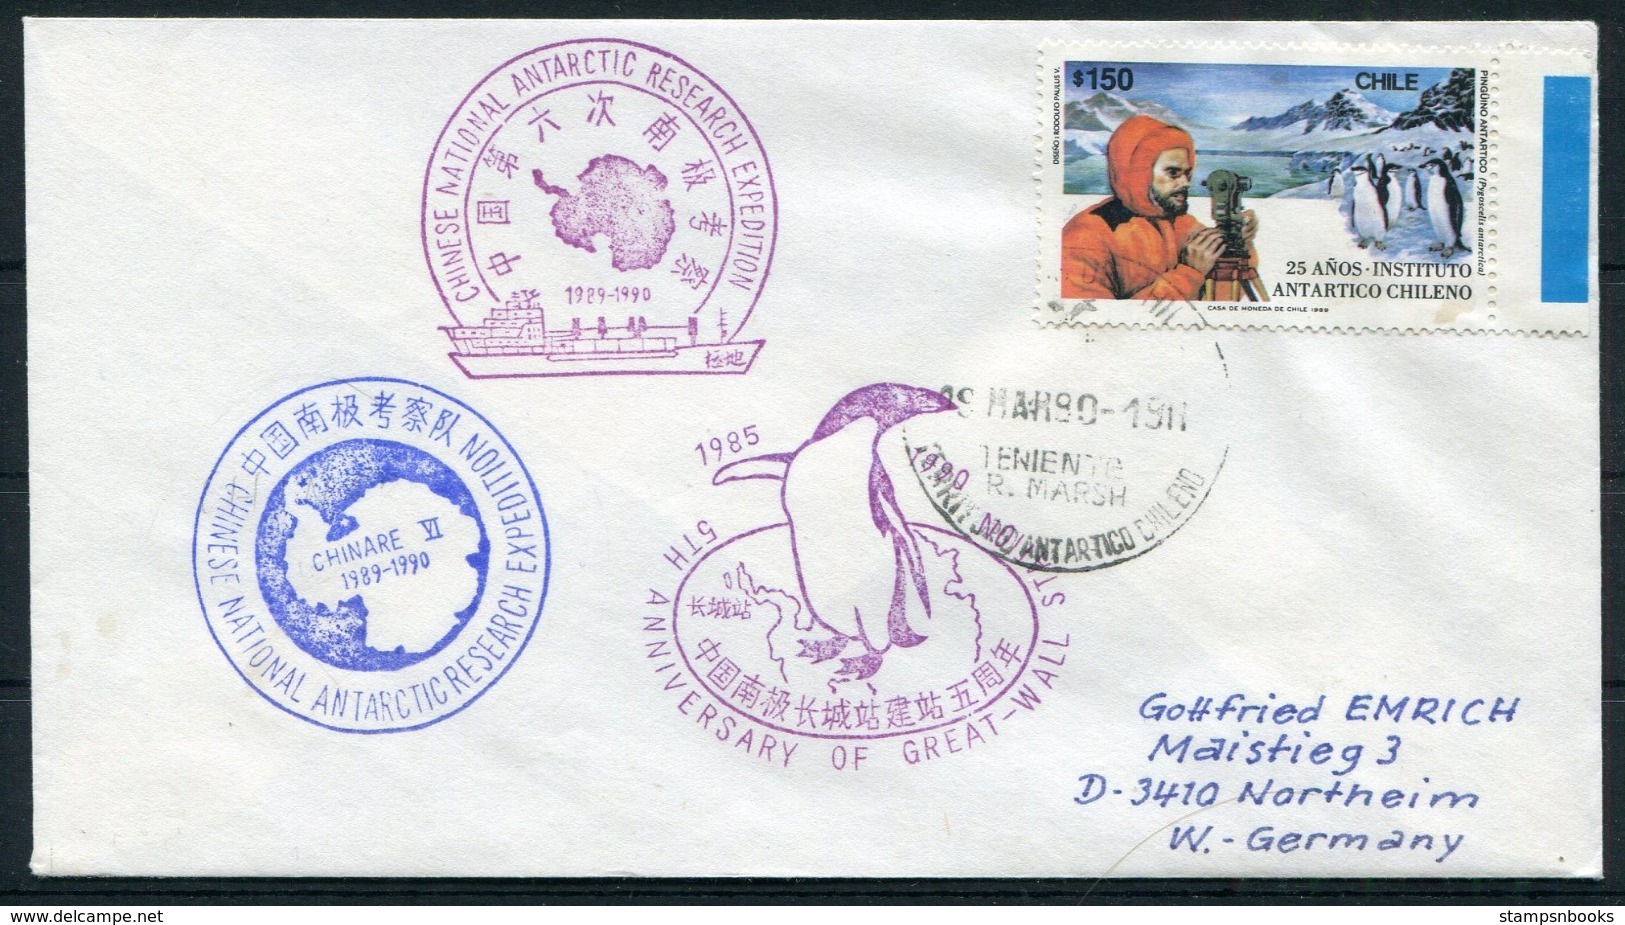 1990 Chile China Antarctic Polar Penguin CHINARE 6 Exdpedition Cover. Great Wall Station - Antarctic Expeditions